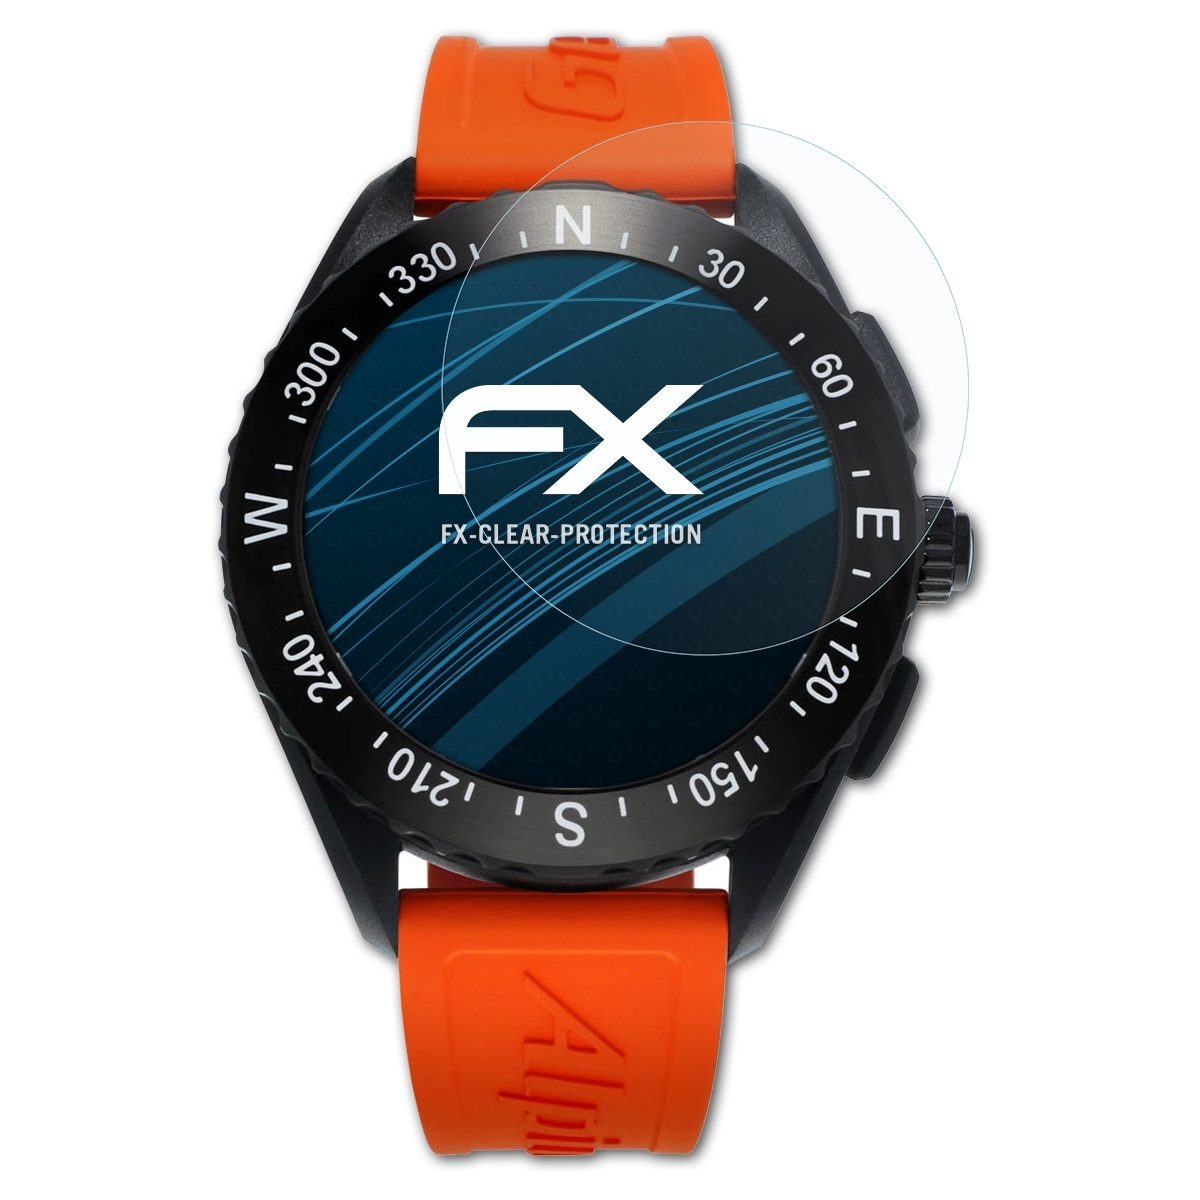 ATFOLIX 3x FX-Clear Displayschutz(für AlpinerX) Alpina